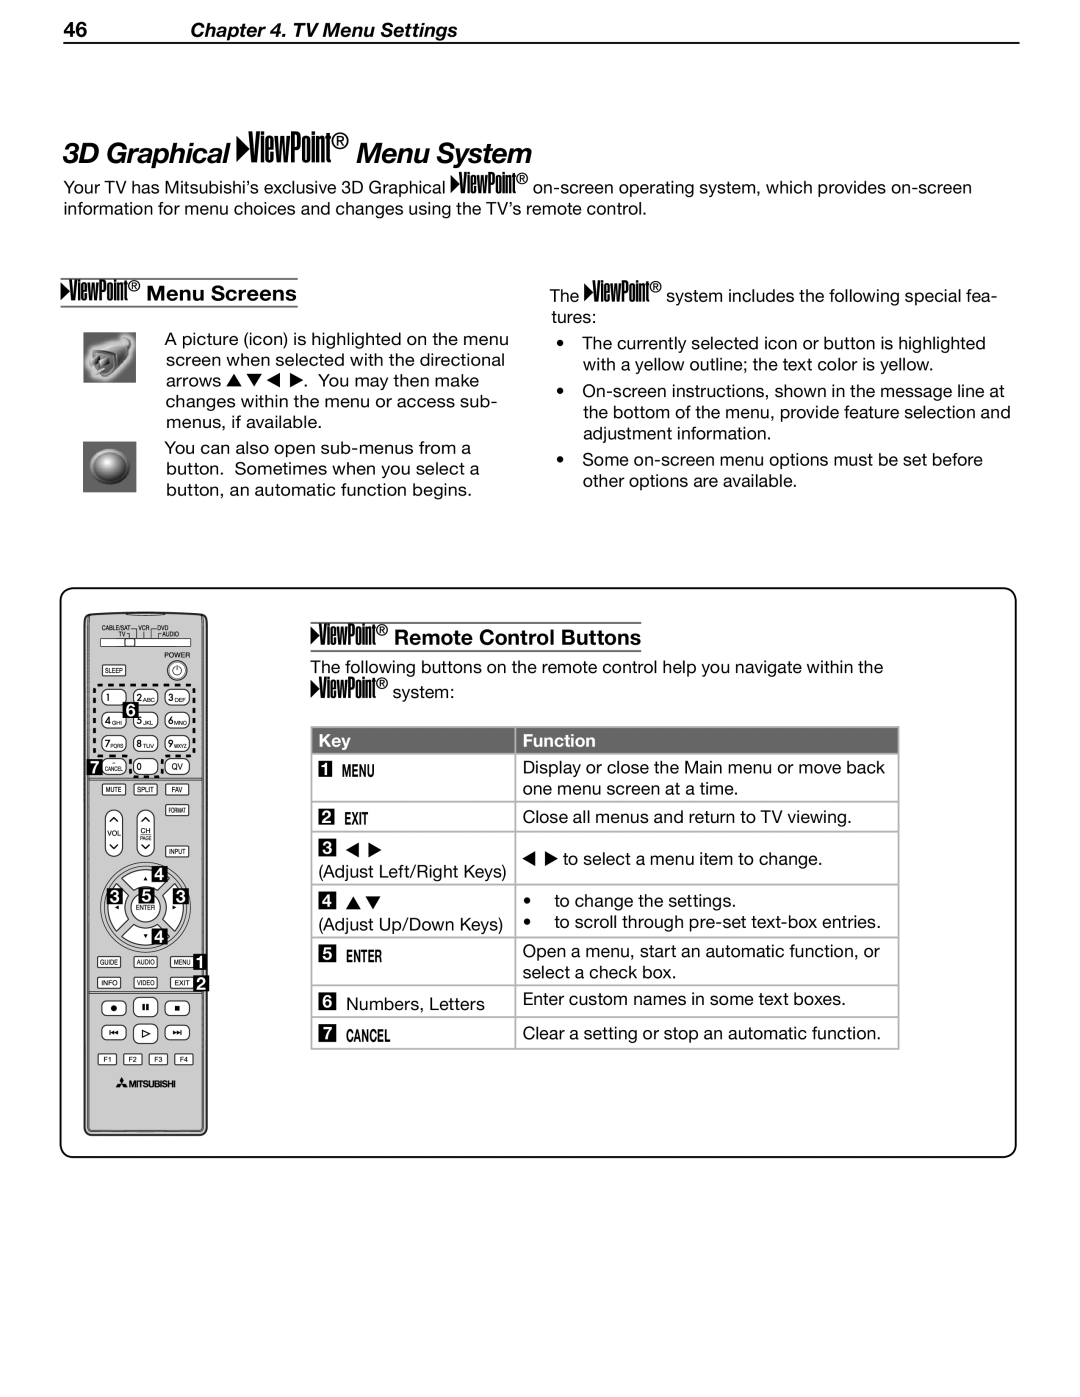 Mitsubishi Electronics LT-37131 3D Graphical Menu System, Menu Screens, Remote Control Buttons, TV Menu Settings, Exit 